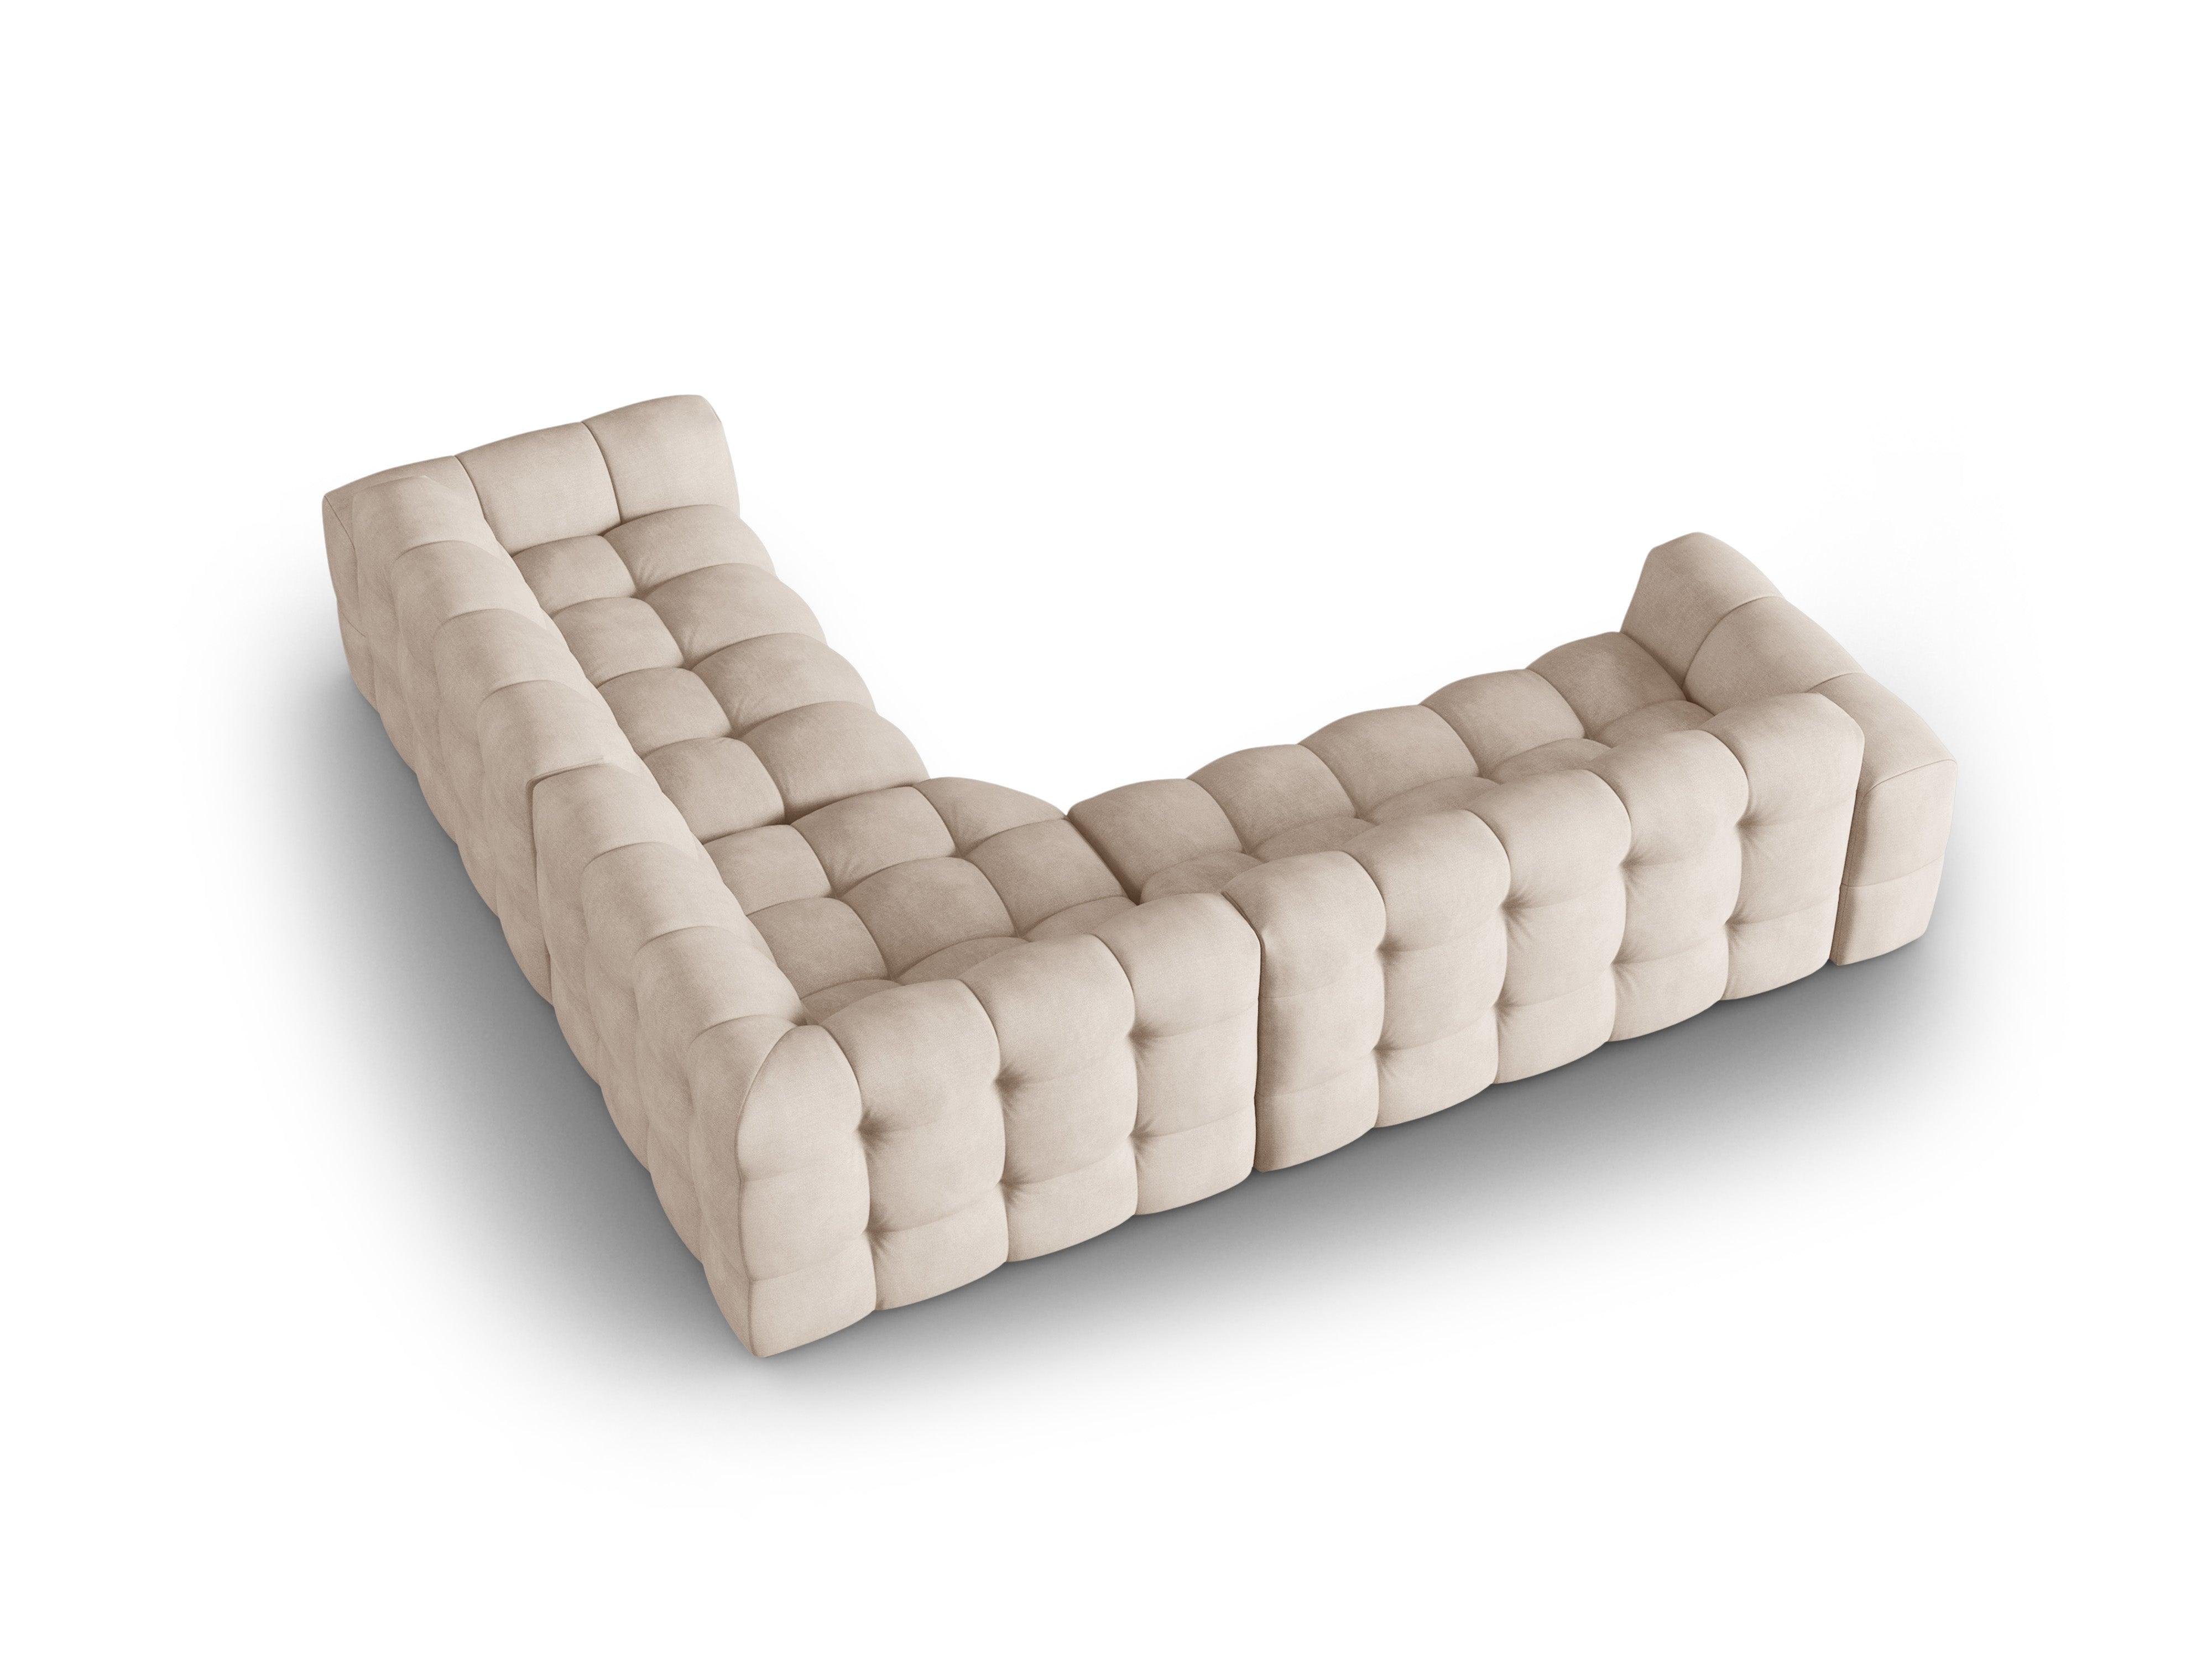 Symmetrical Corner Sofa, "Nino", 5 Seats, 294x294x68
Made in Europe, Maison Heritage, Eye on Design